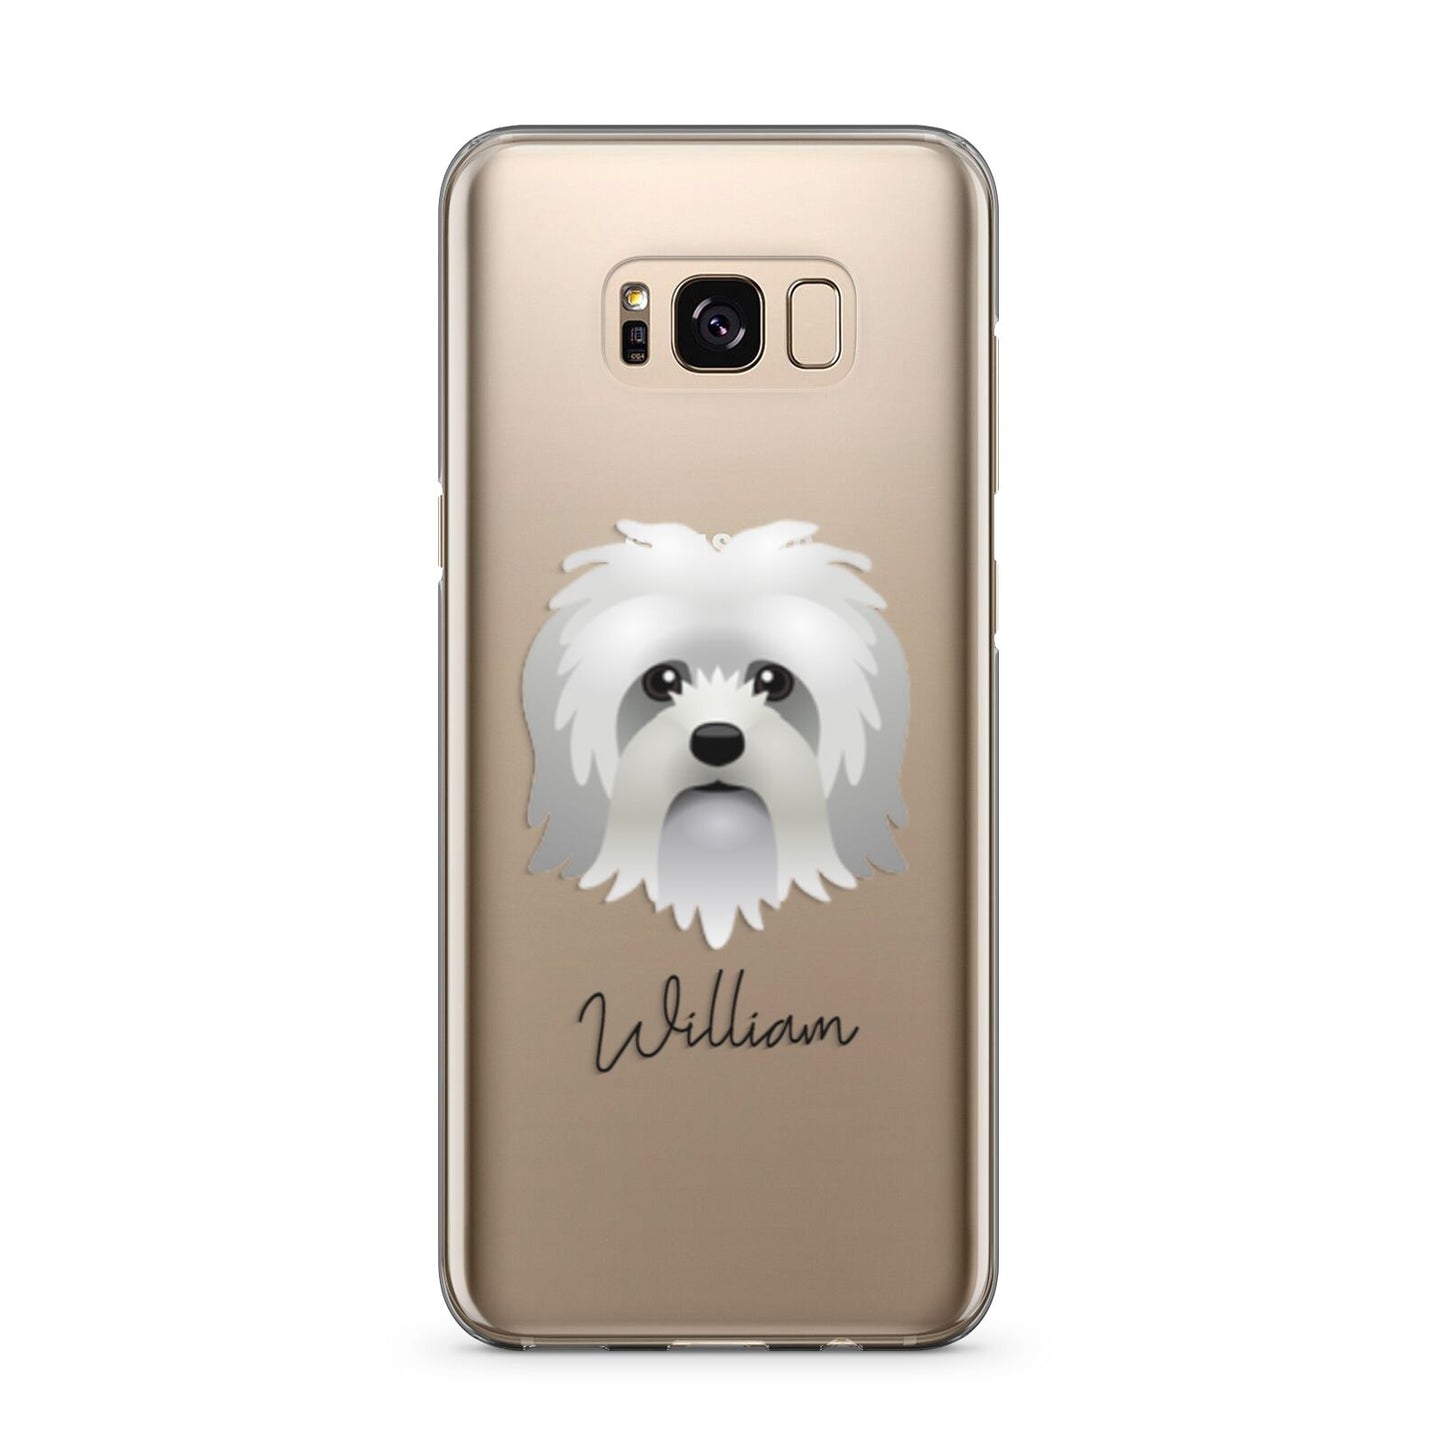 Lo wchen Personalised Samsung Galaxy S8 Plus Case